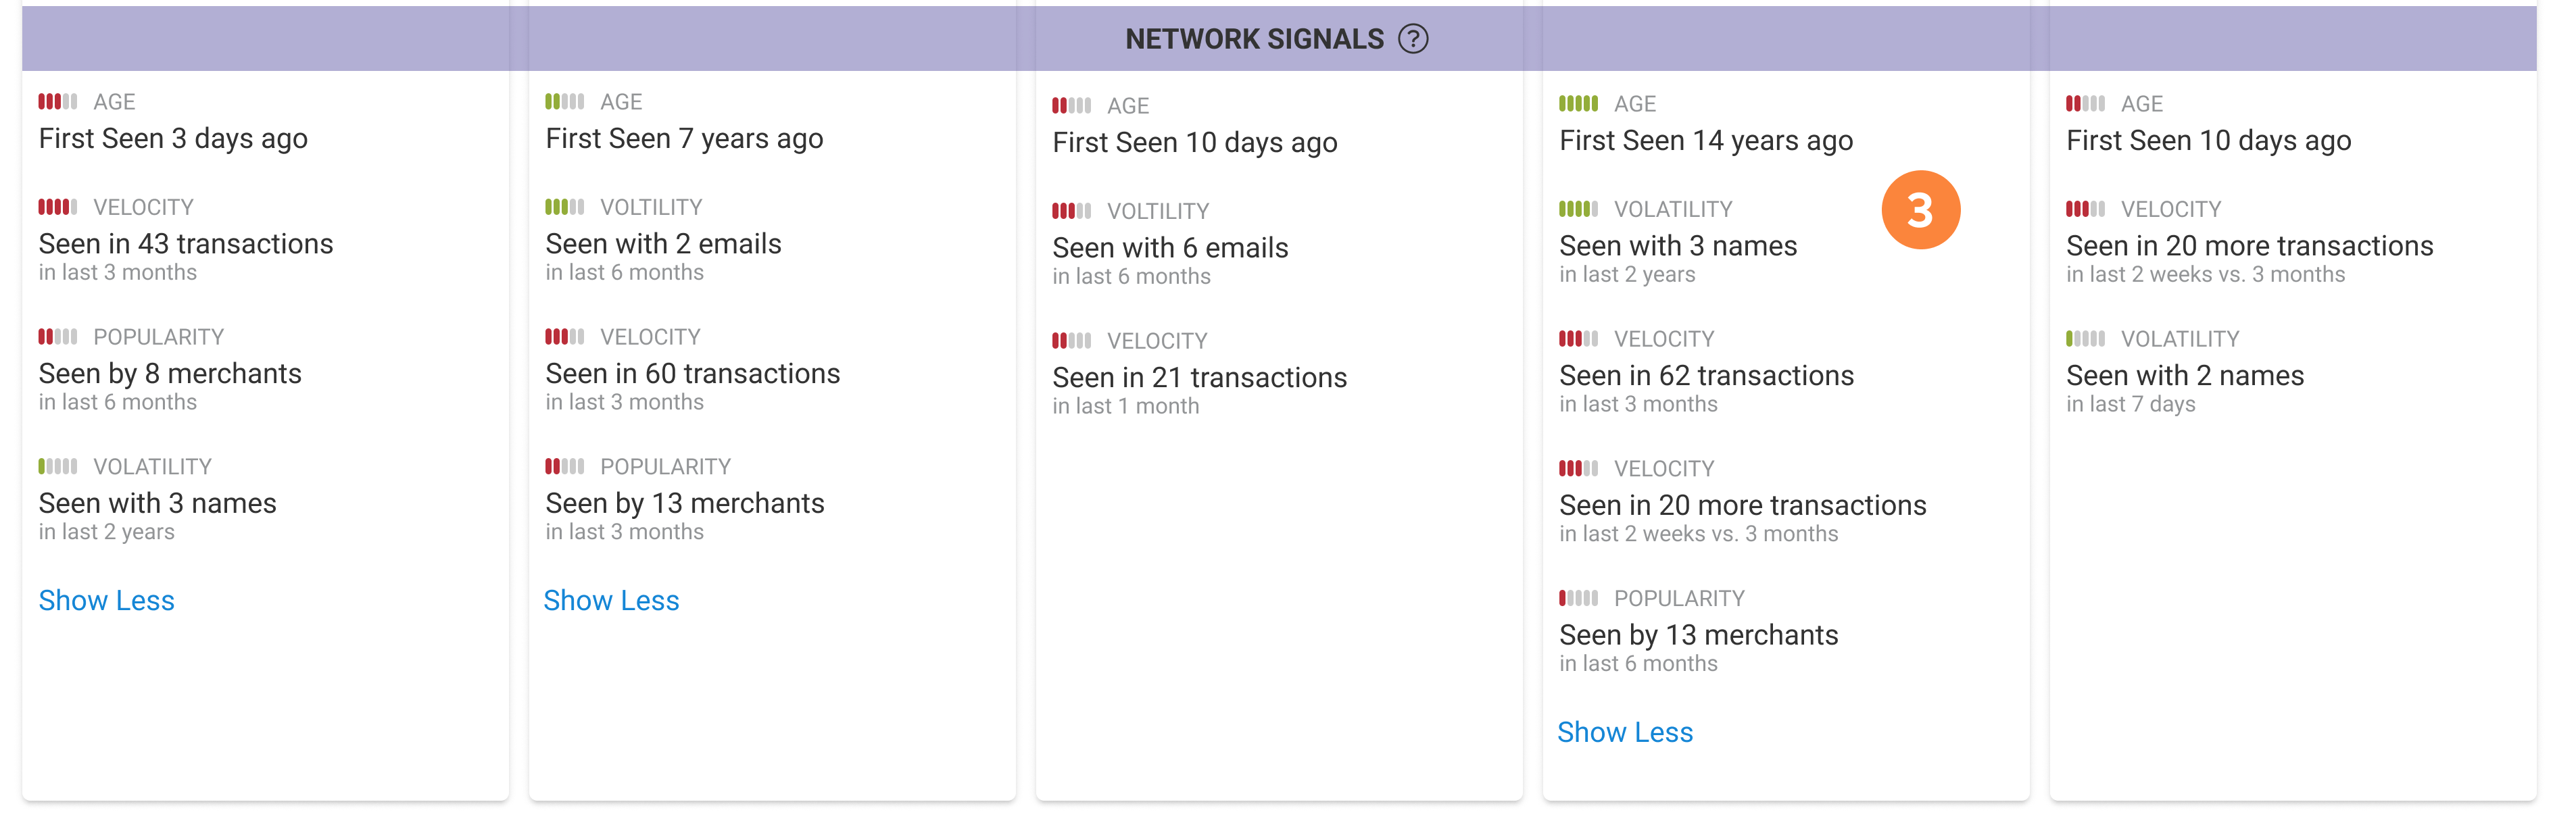 3_network_risk_signals.png